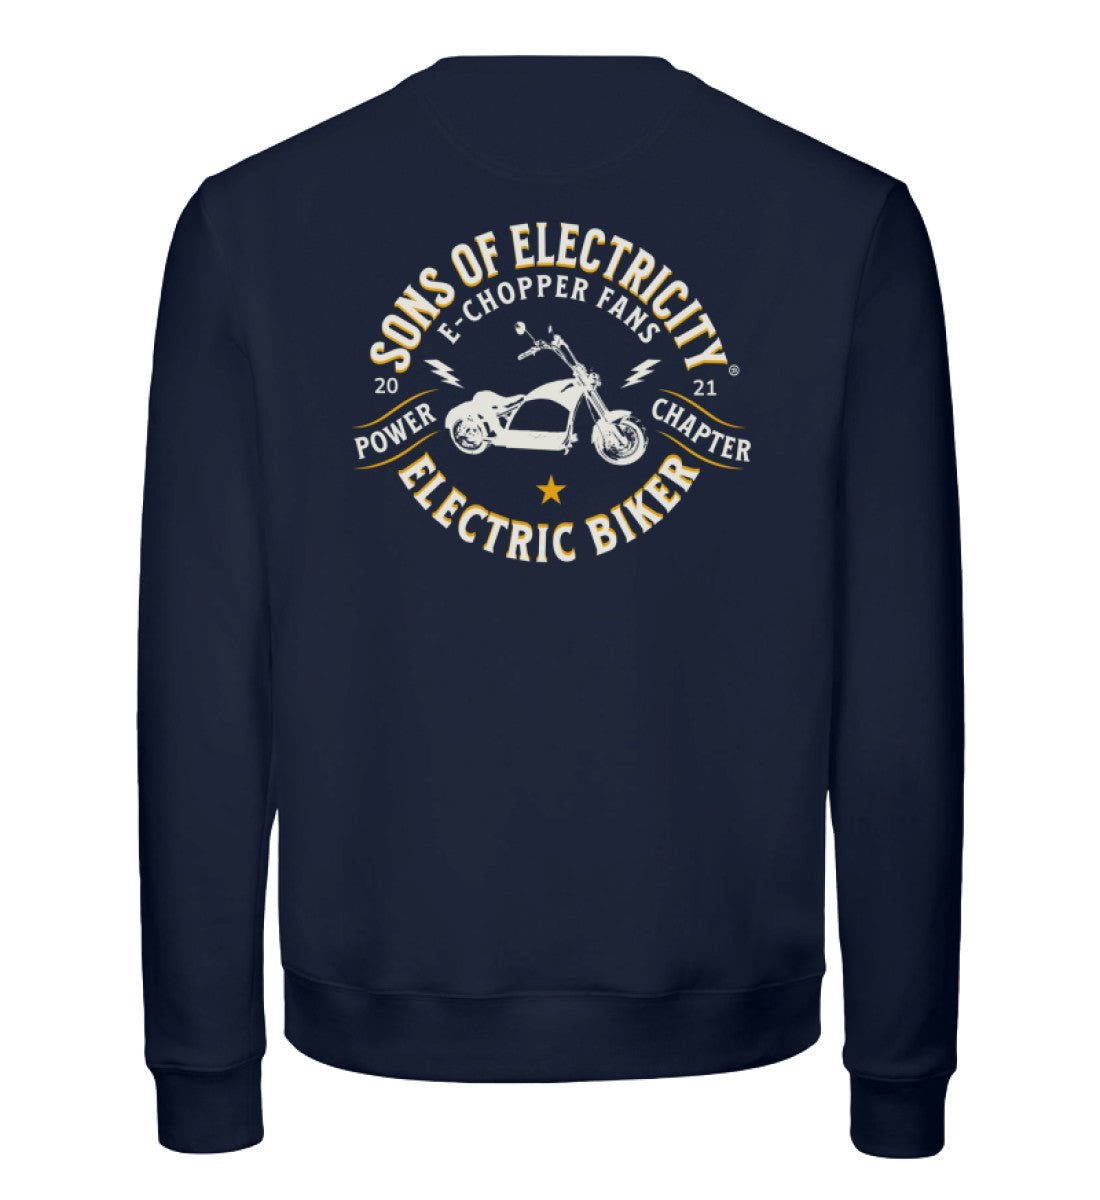 Bio Premium E-Chopper (1) Sweatshirt: SONS OF ELECTRICITY